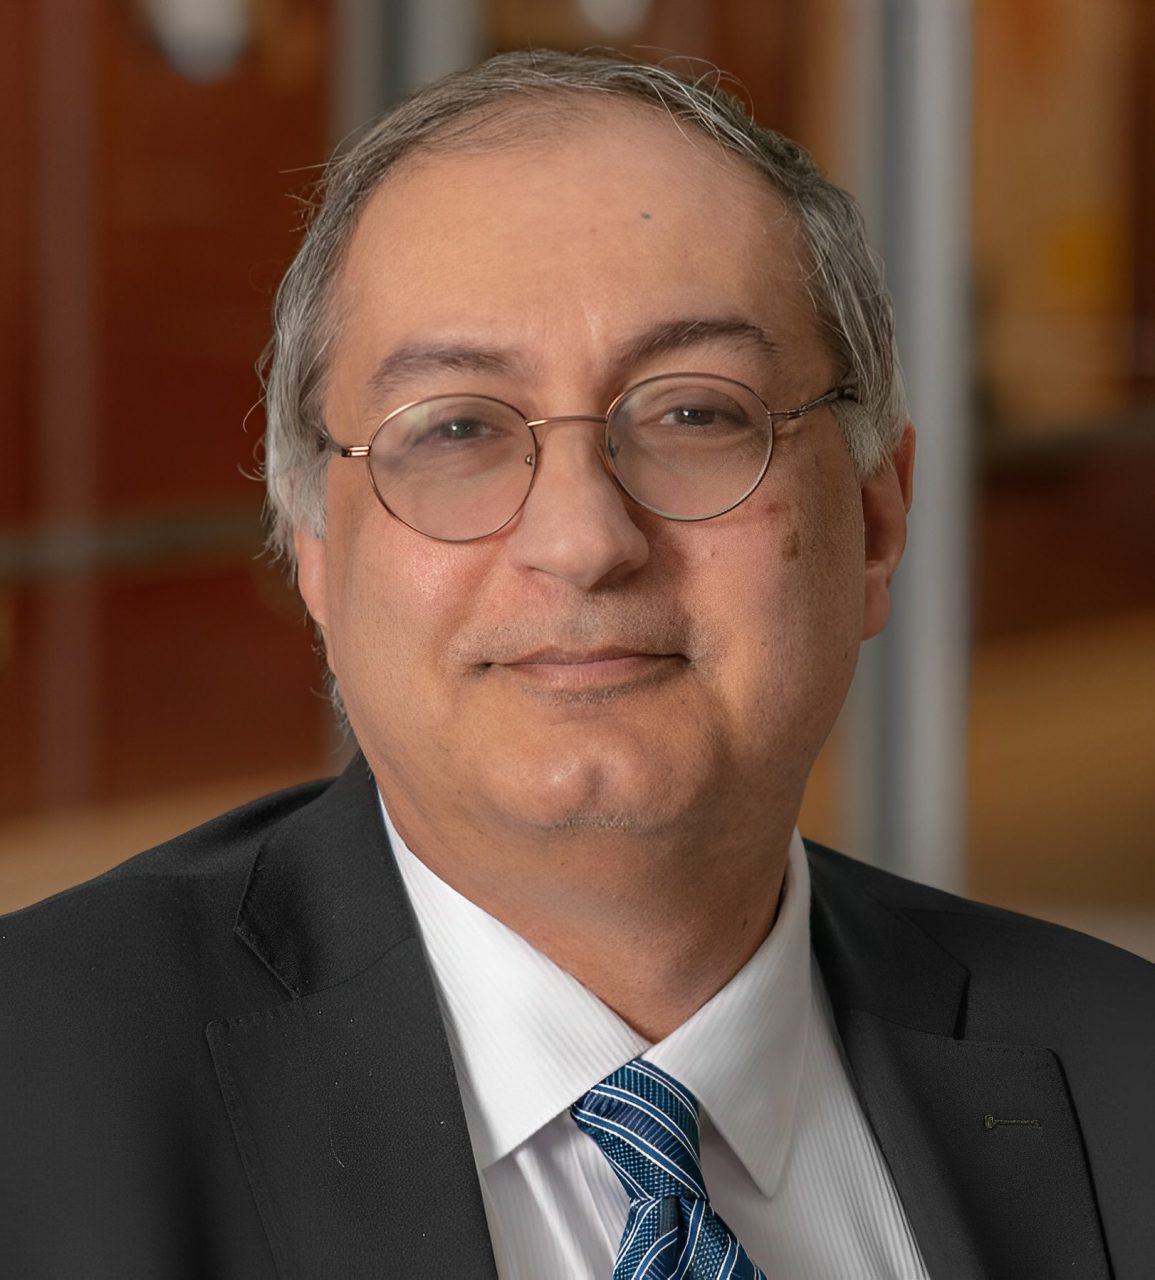 Wafik S. El-Deiry: Appreciated the historic perspective provided by Dr. Gordon Freeman…